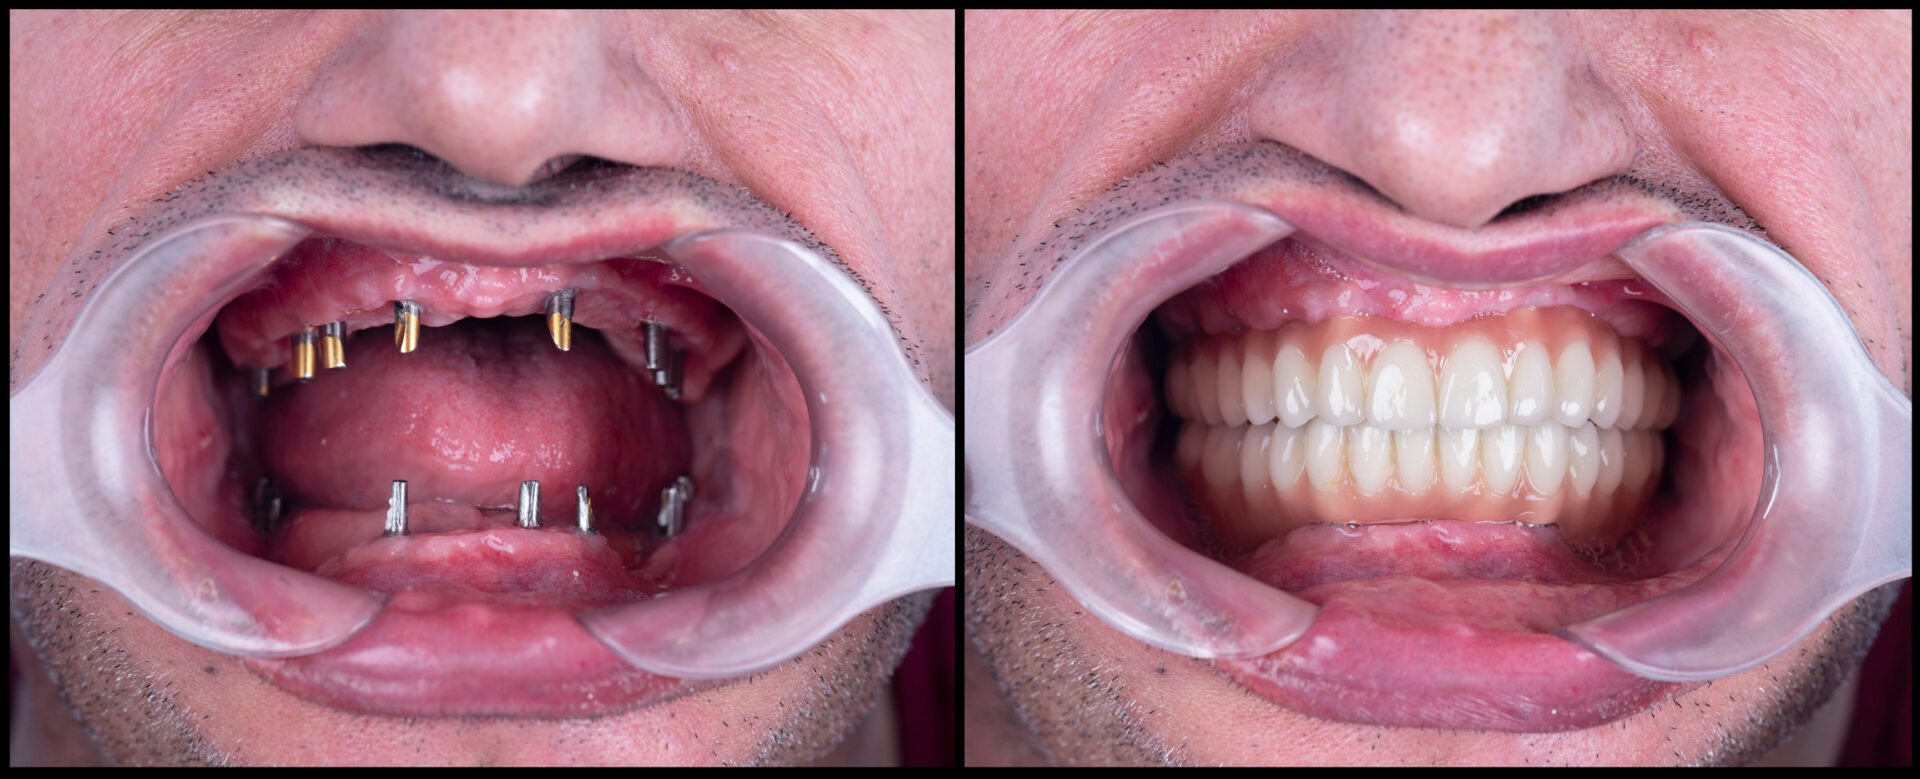 screw treatment for teeth